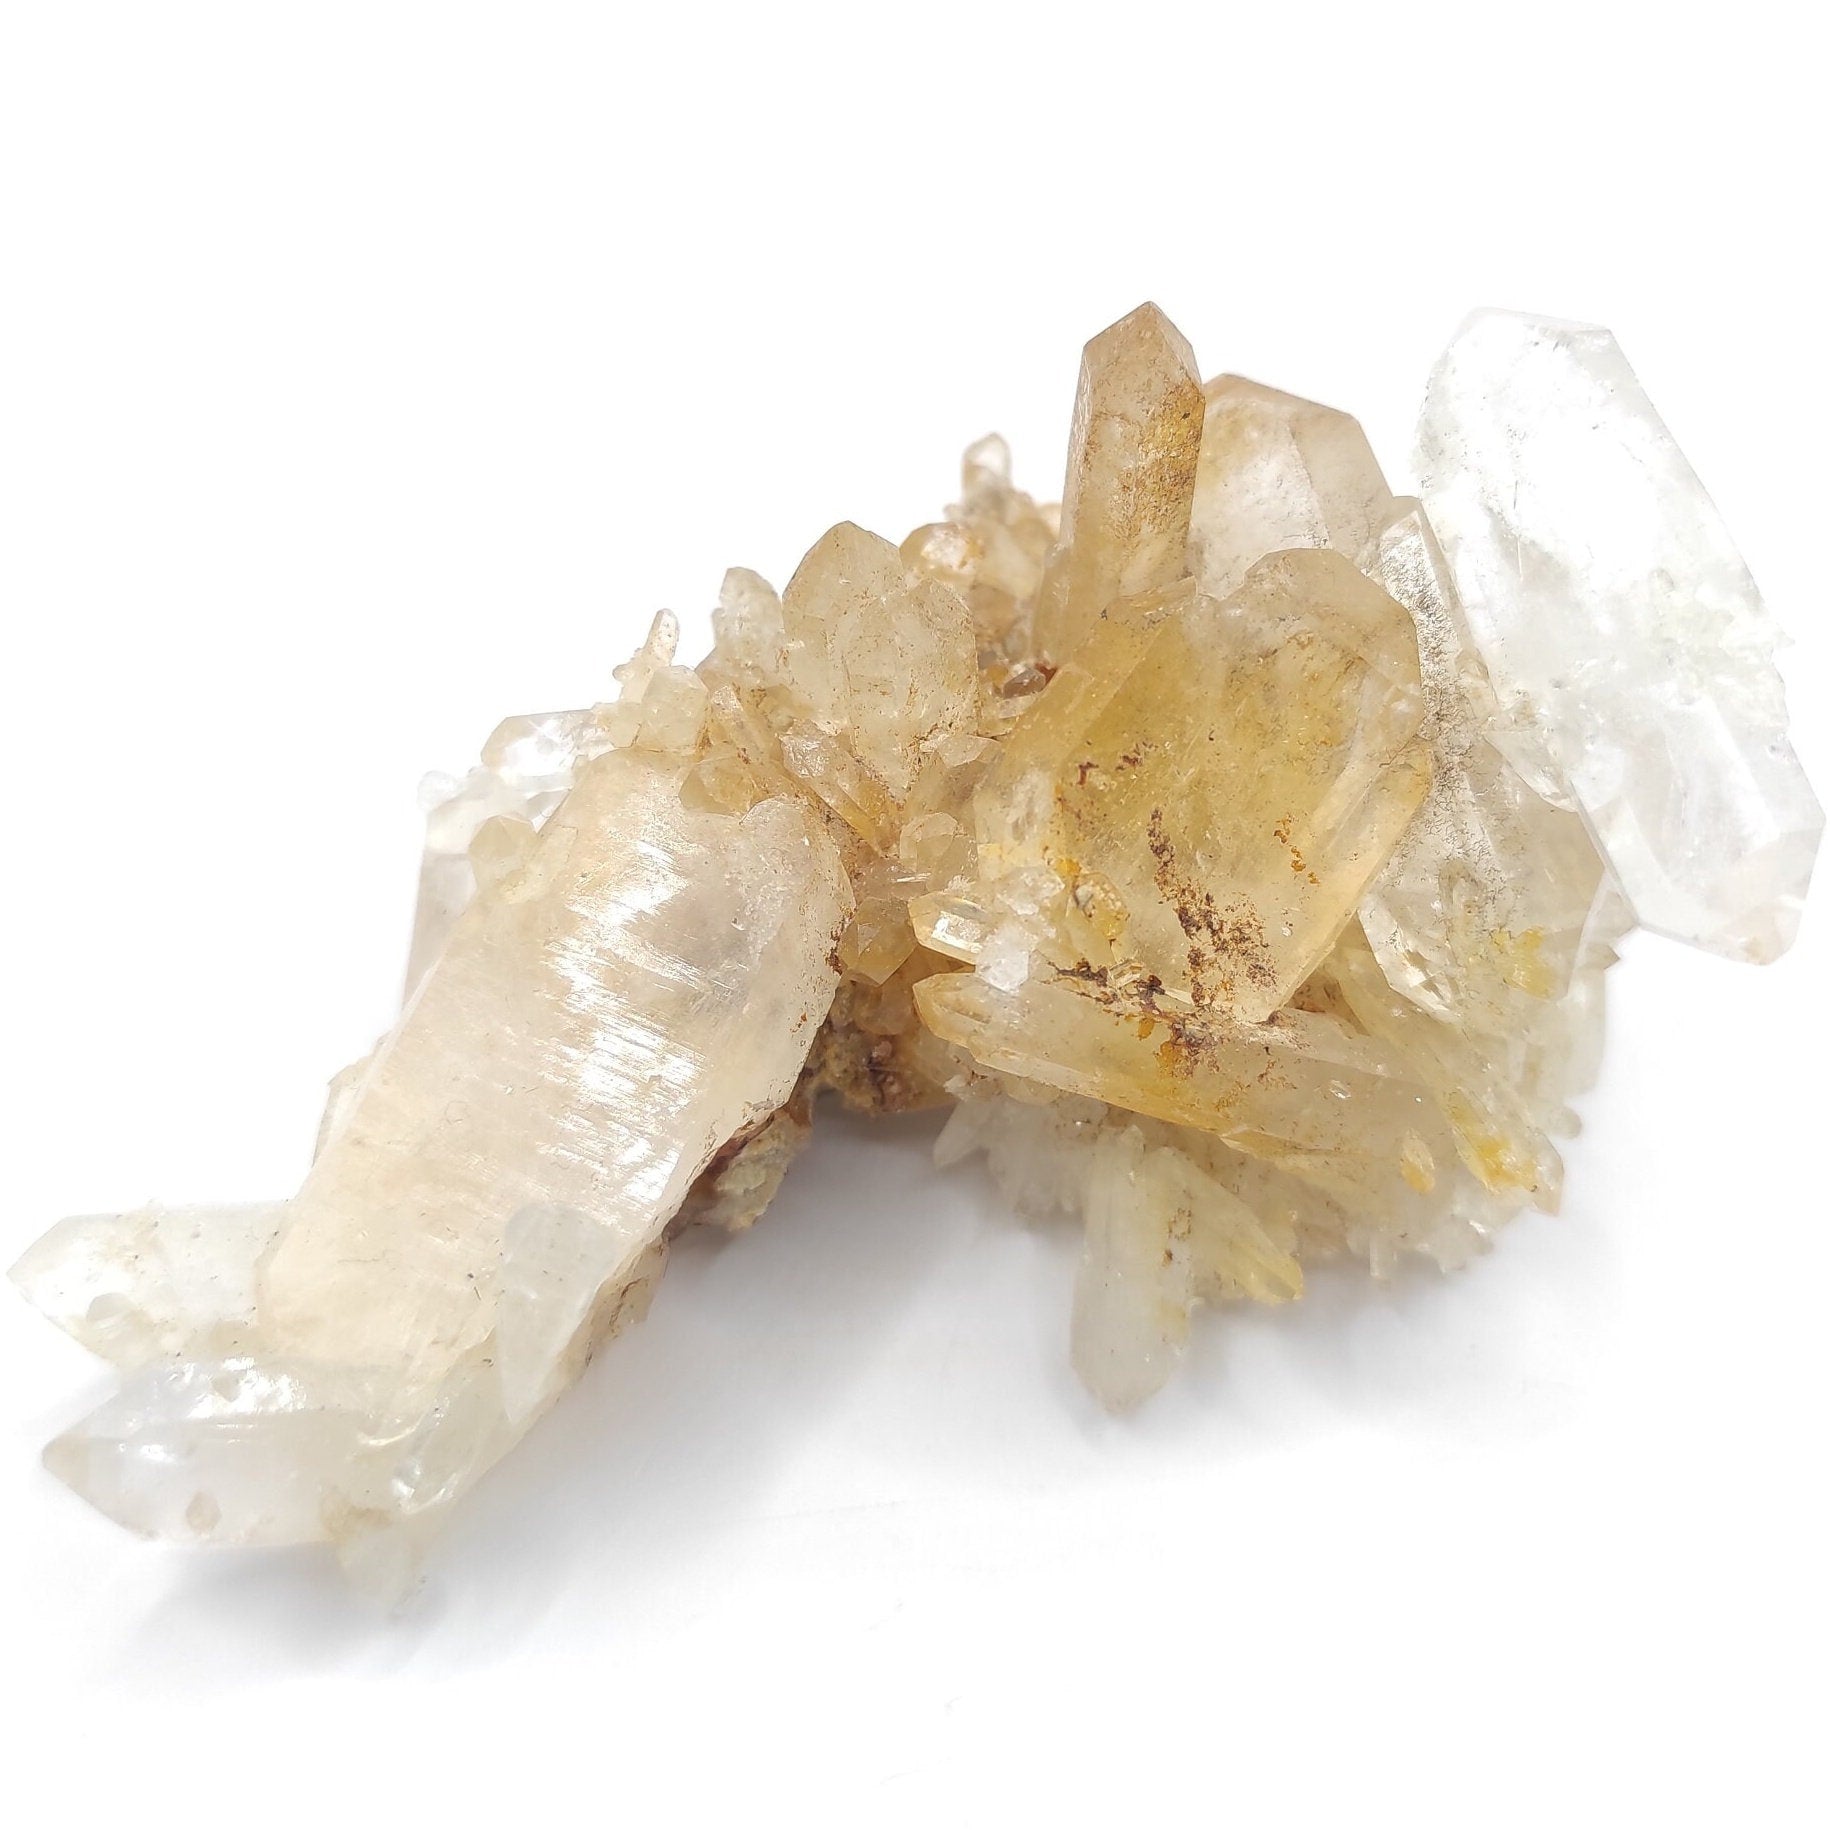 97g Natural Quartz Crystal Cluster - Clear Quartz from Pakistan - Yellow Quartz Specimen - Balochistan, Pakistan Mineral Specimens